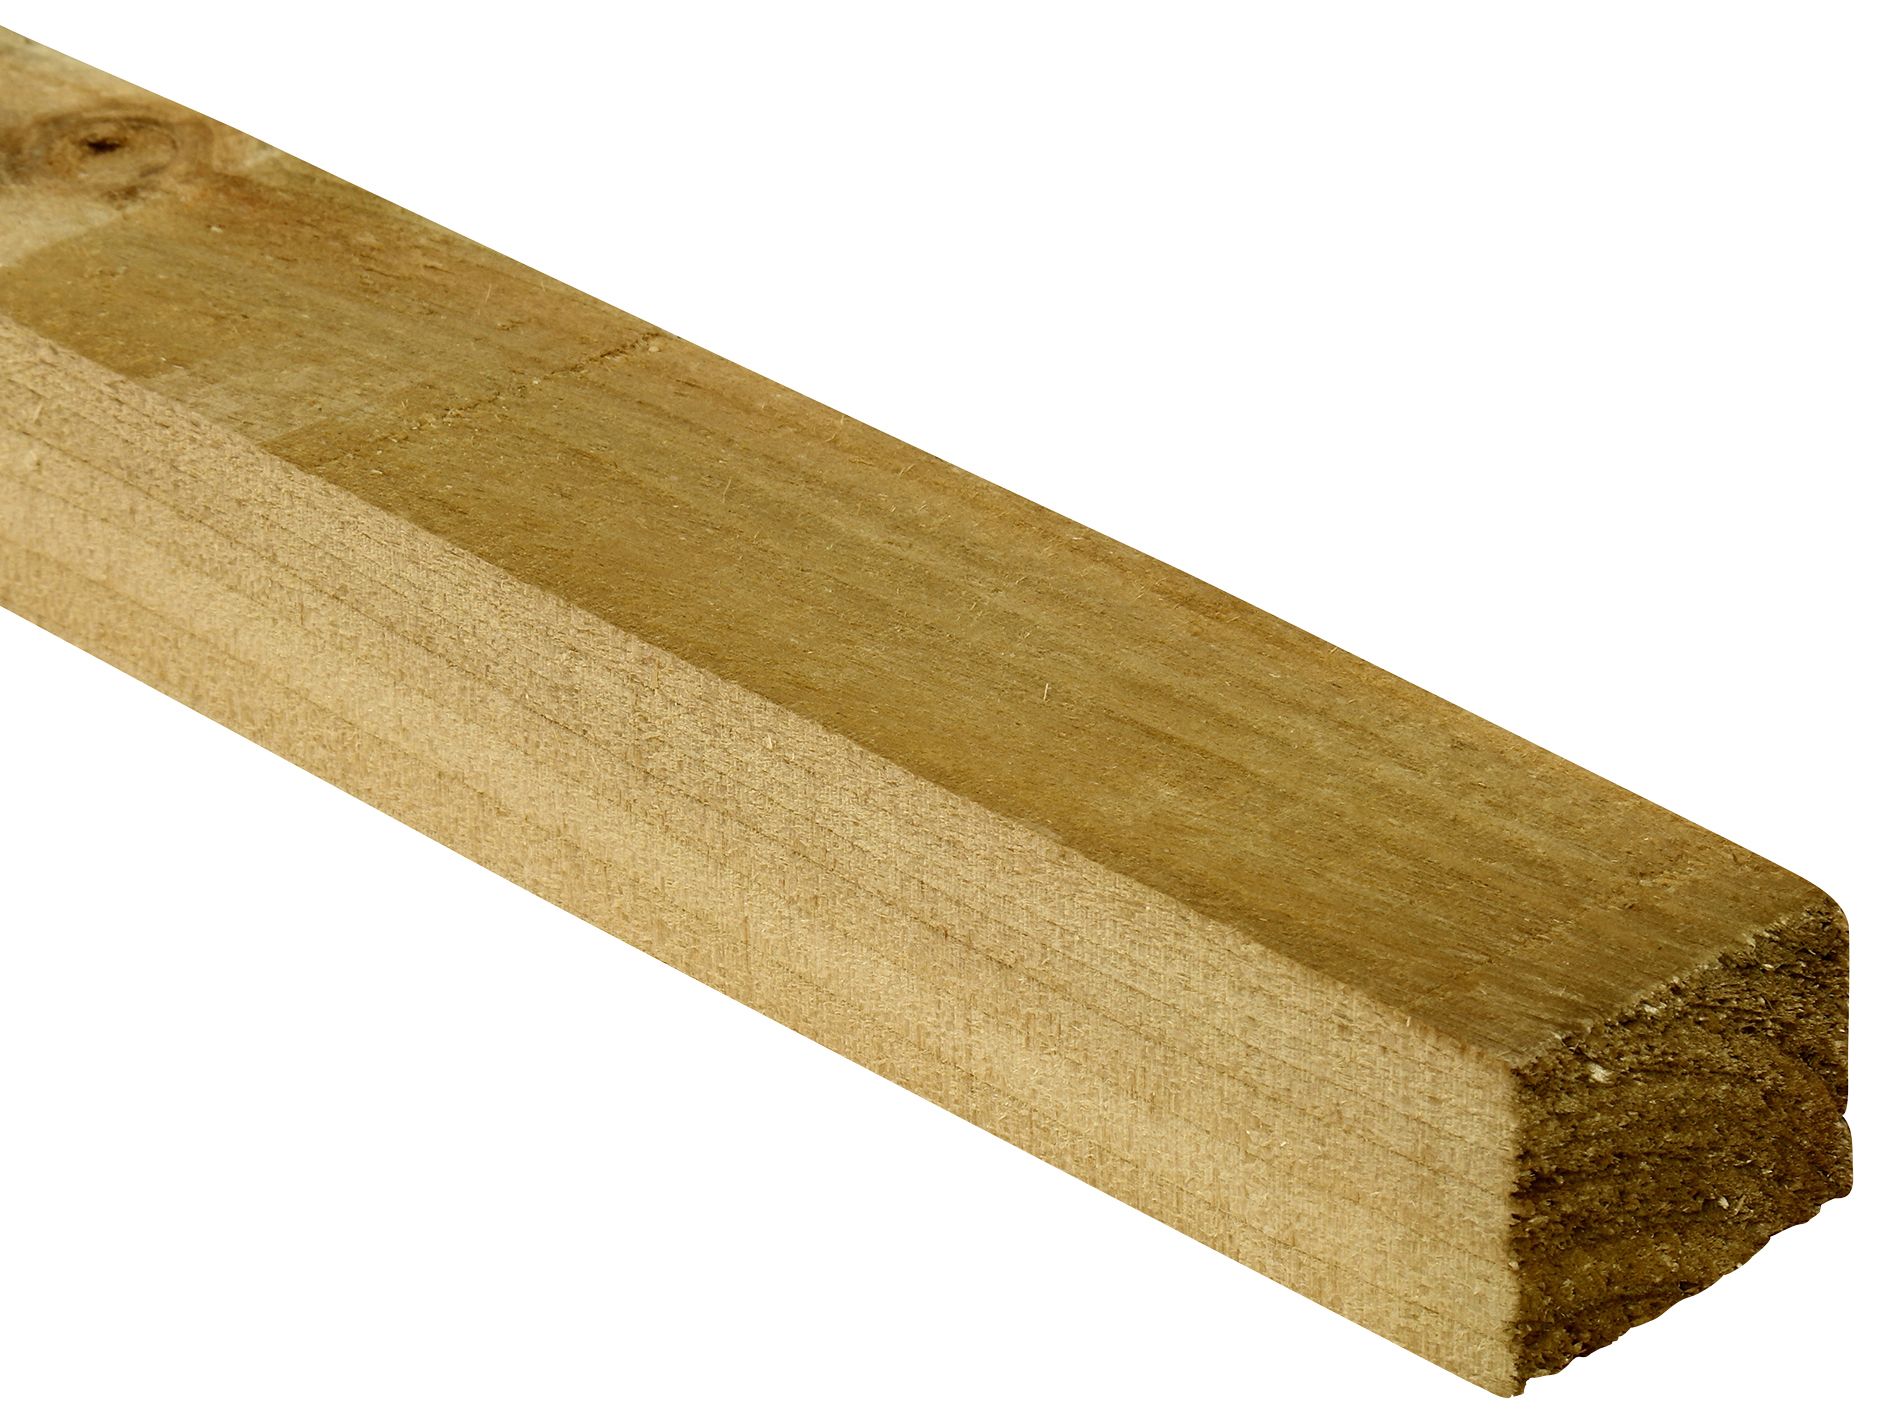 Wickes Treated Sawn Kiln Dried Timber - 45